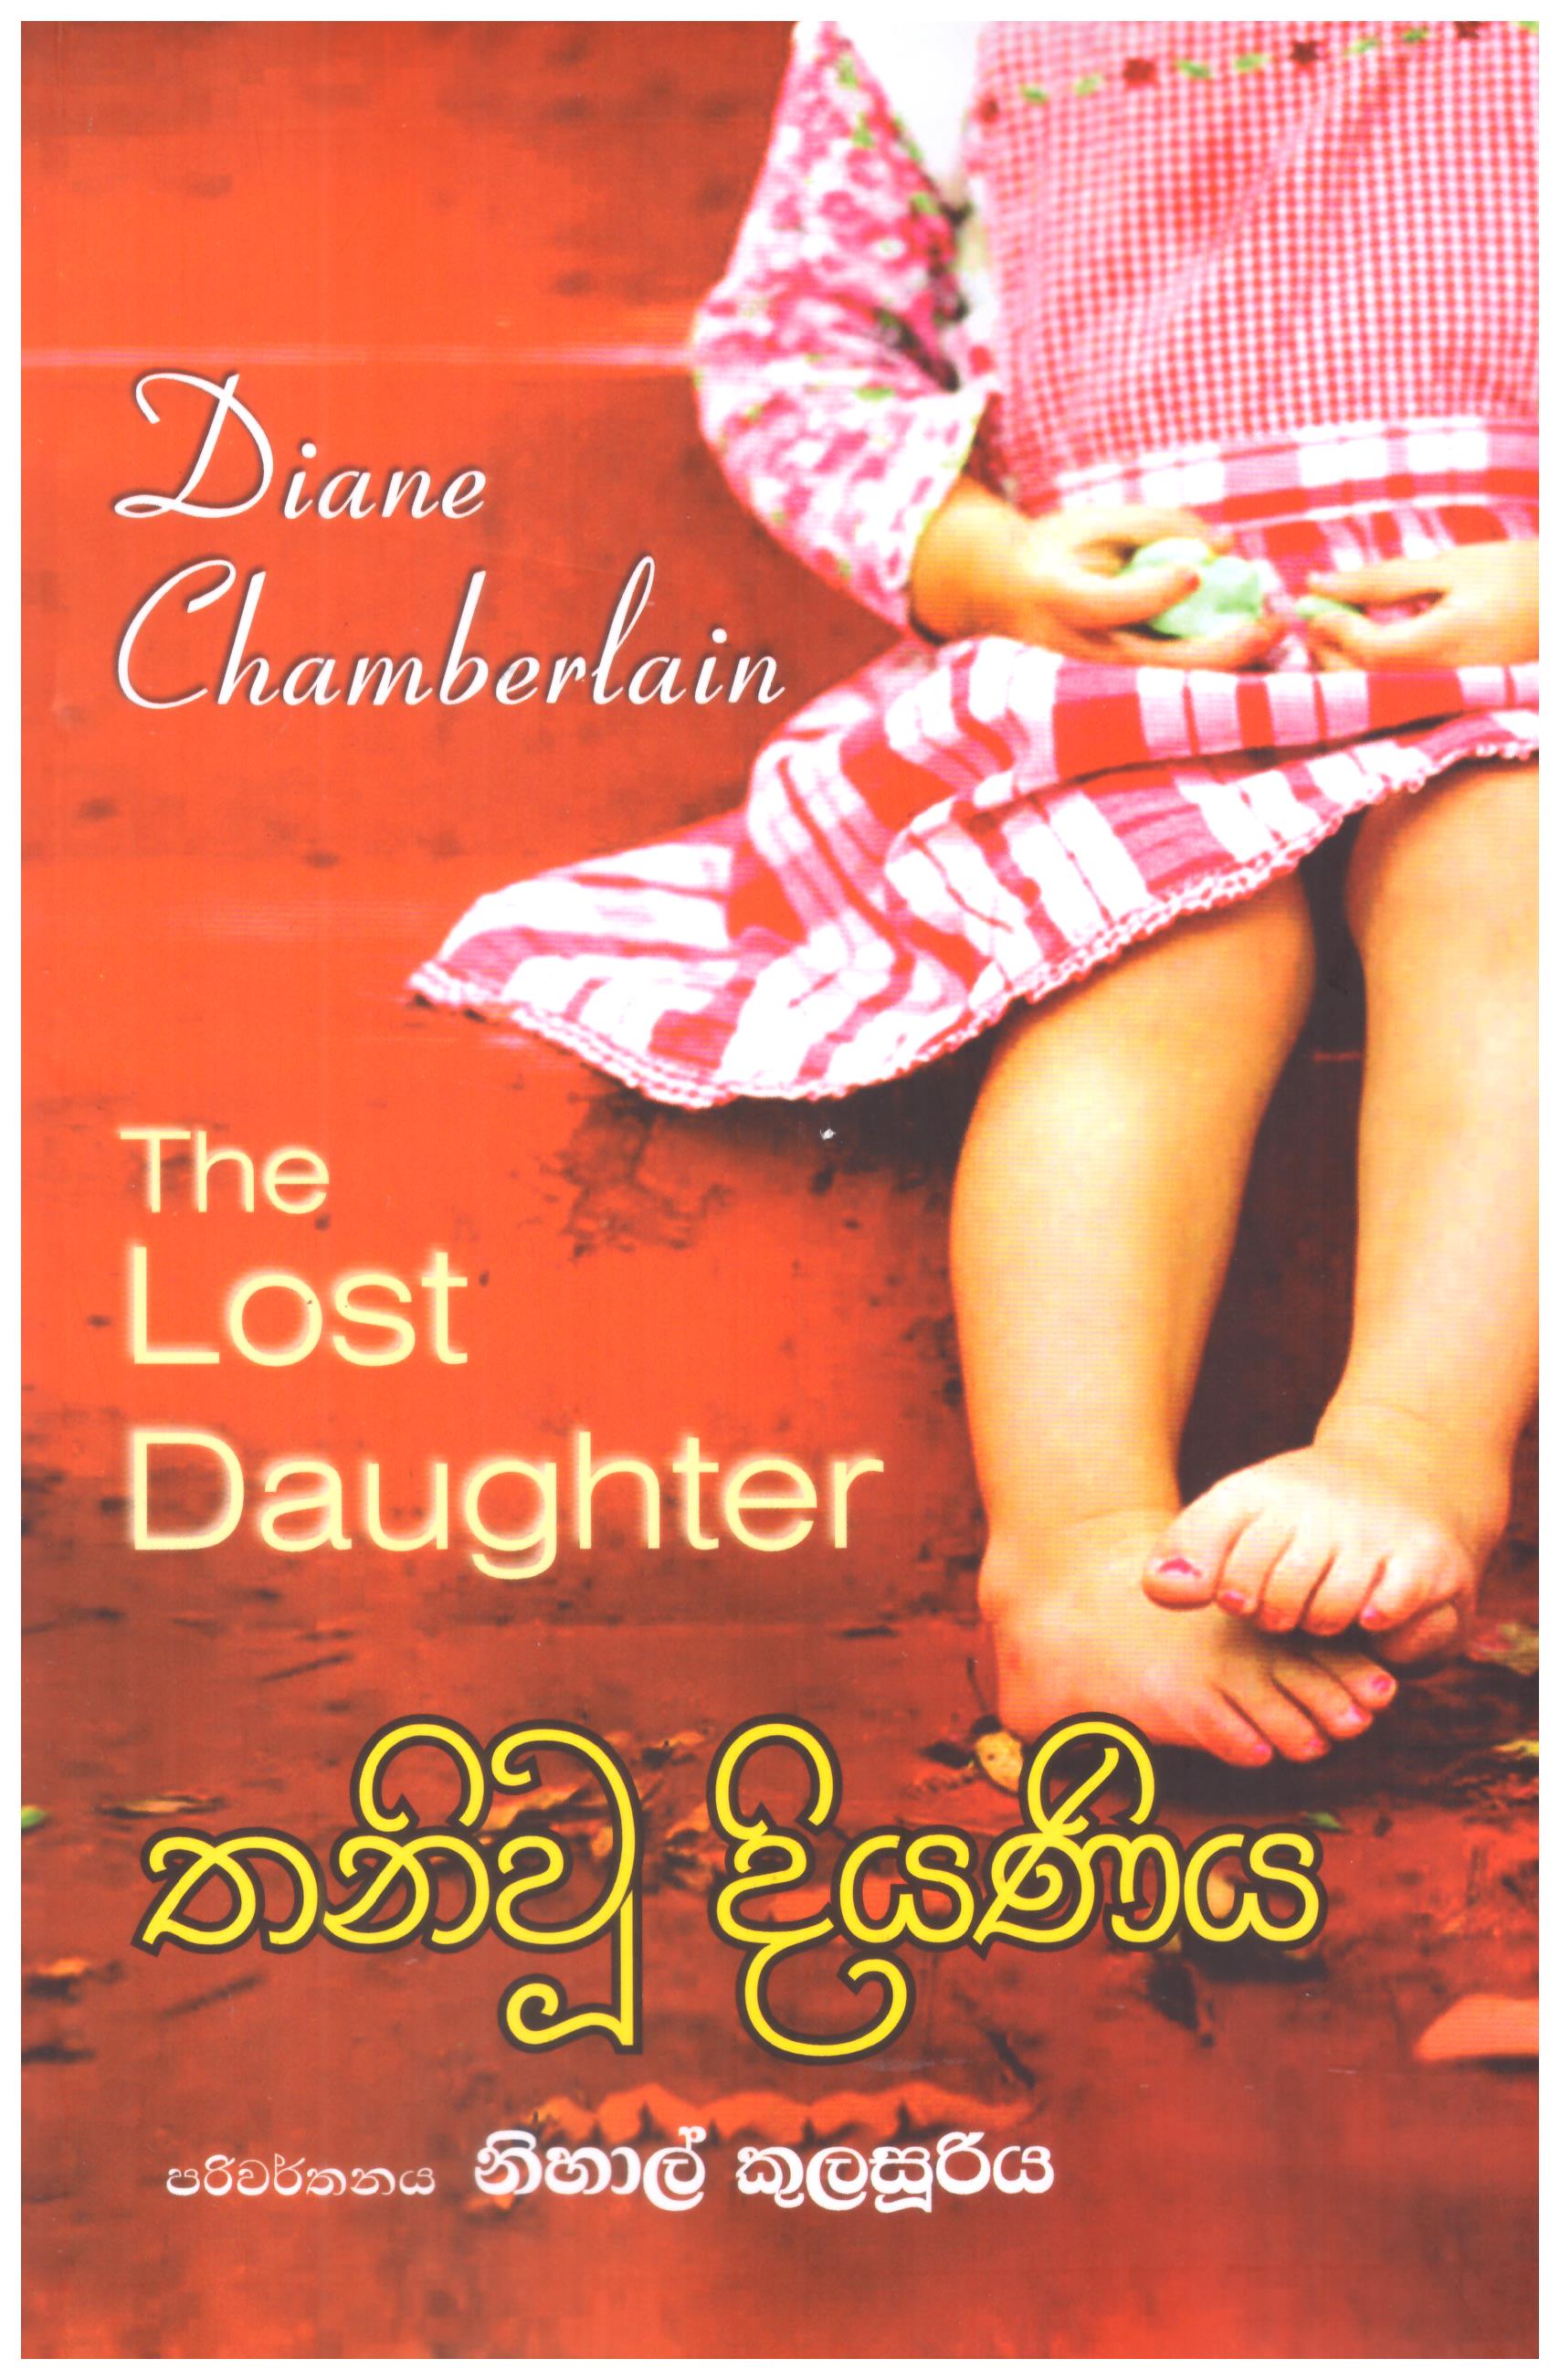 Thani u Diyaniya - Translation of The Lost Daughter byDiane Chamberlain 